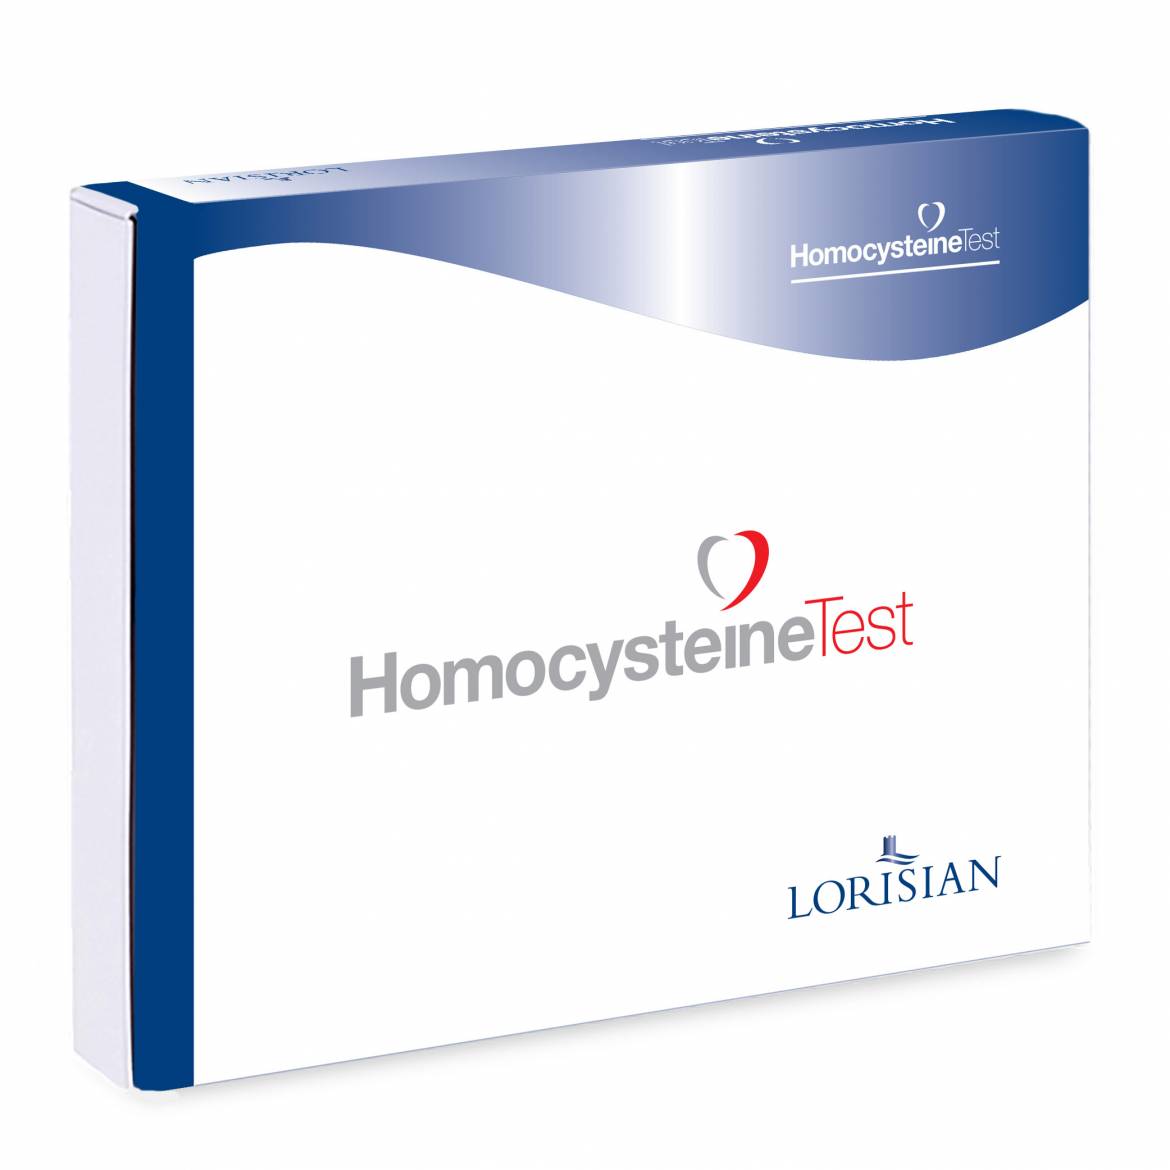 Lorisian-Homocysteine-Copy-2.jpg